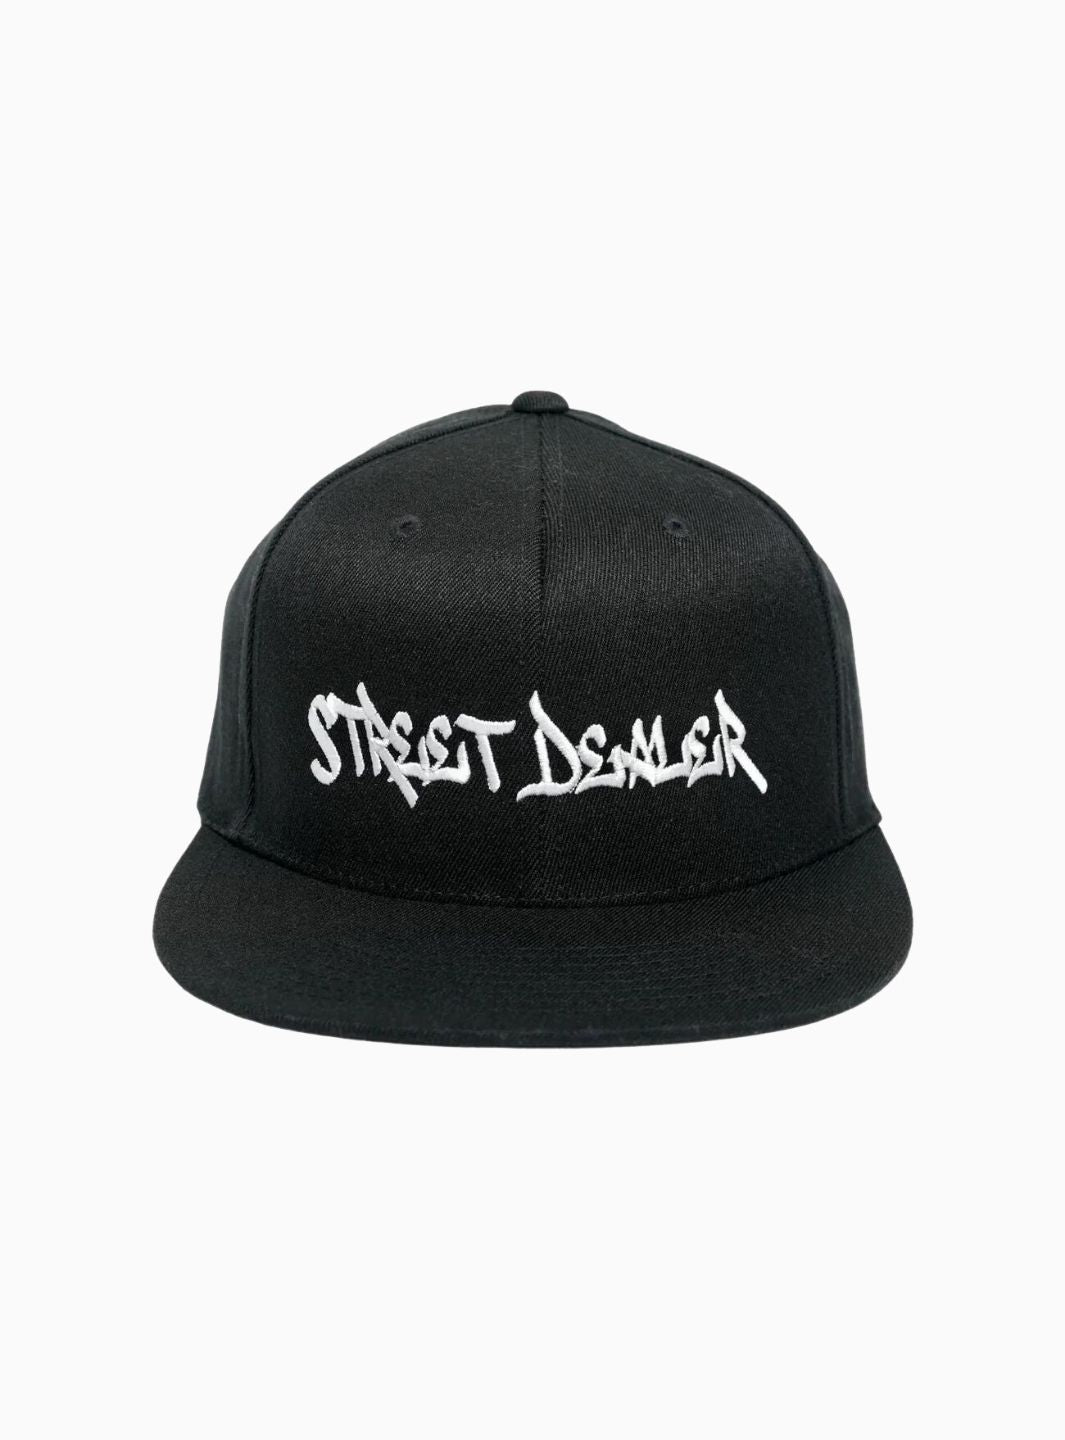 Street Dealer Cap Black